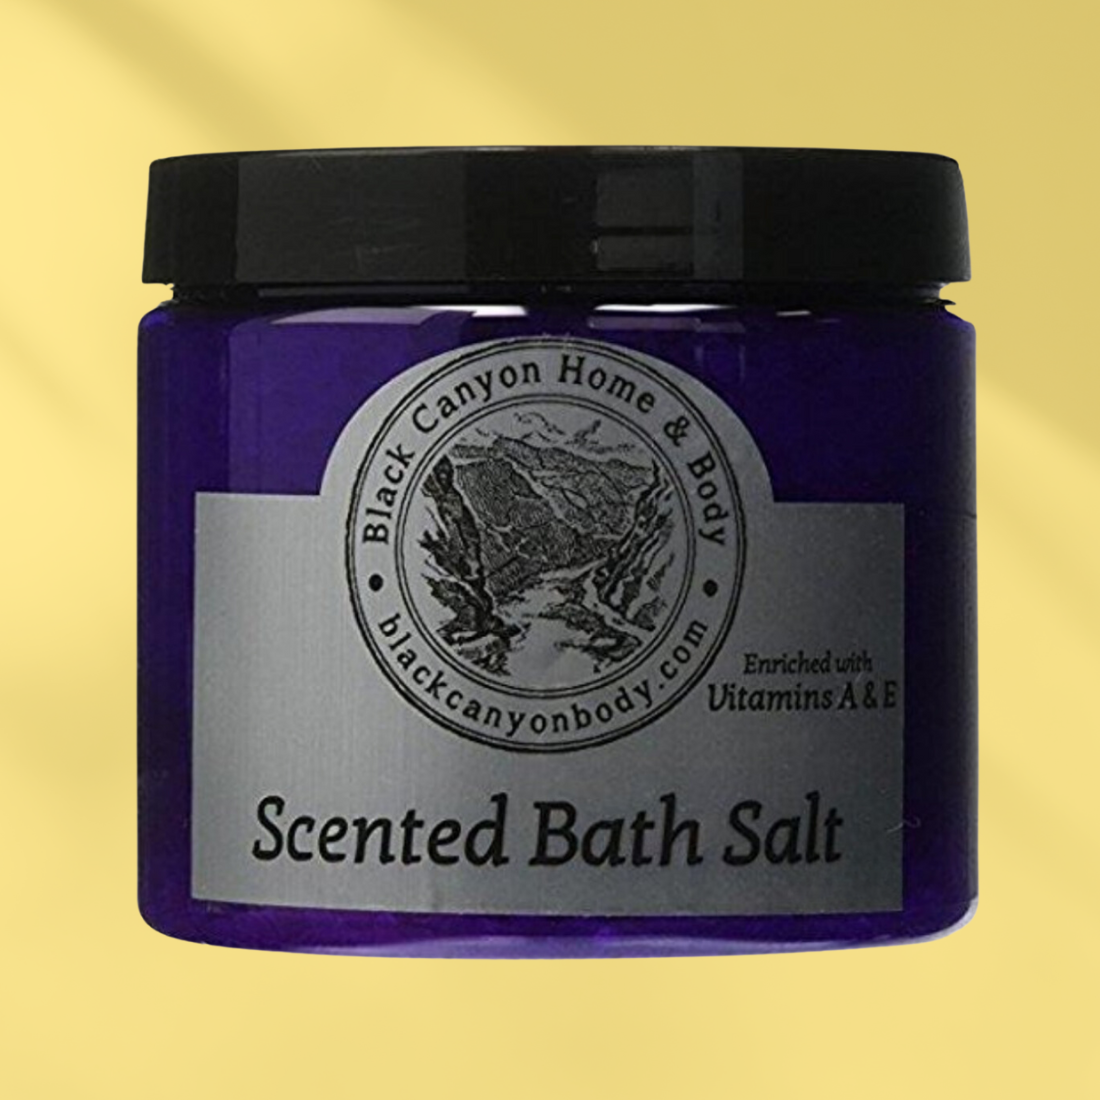 Black Canyon Witches Brew Scented Sea Salt Bath Soak